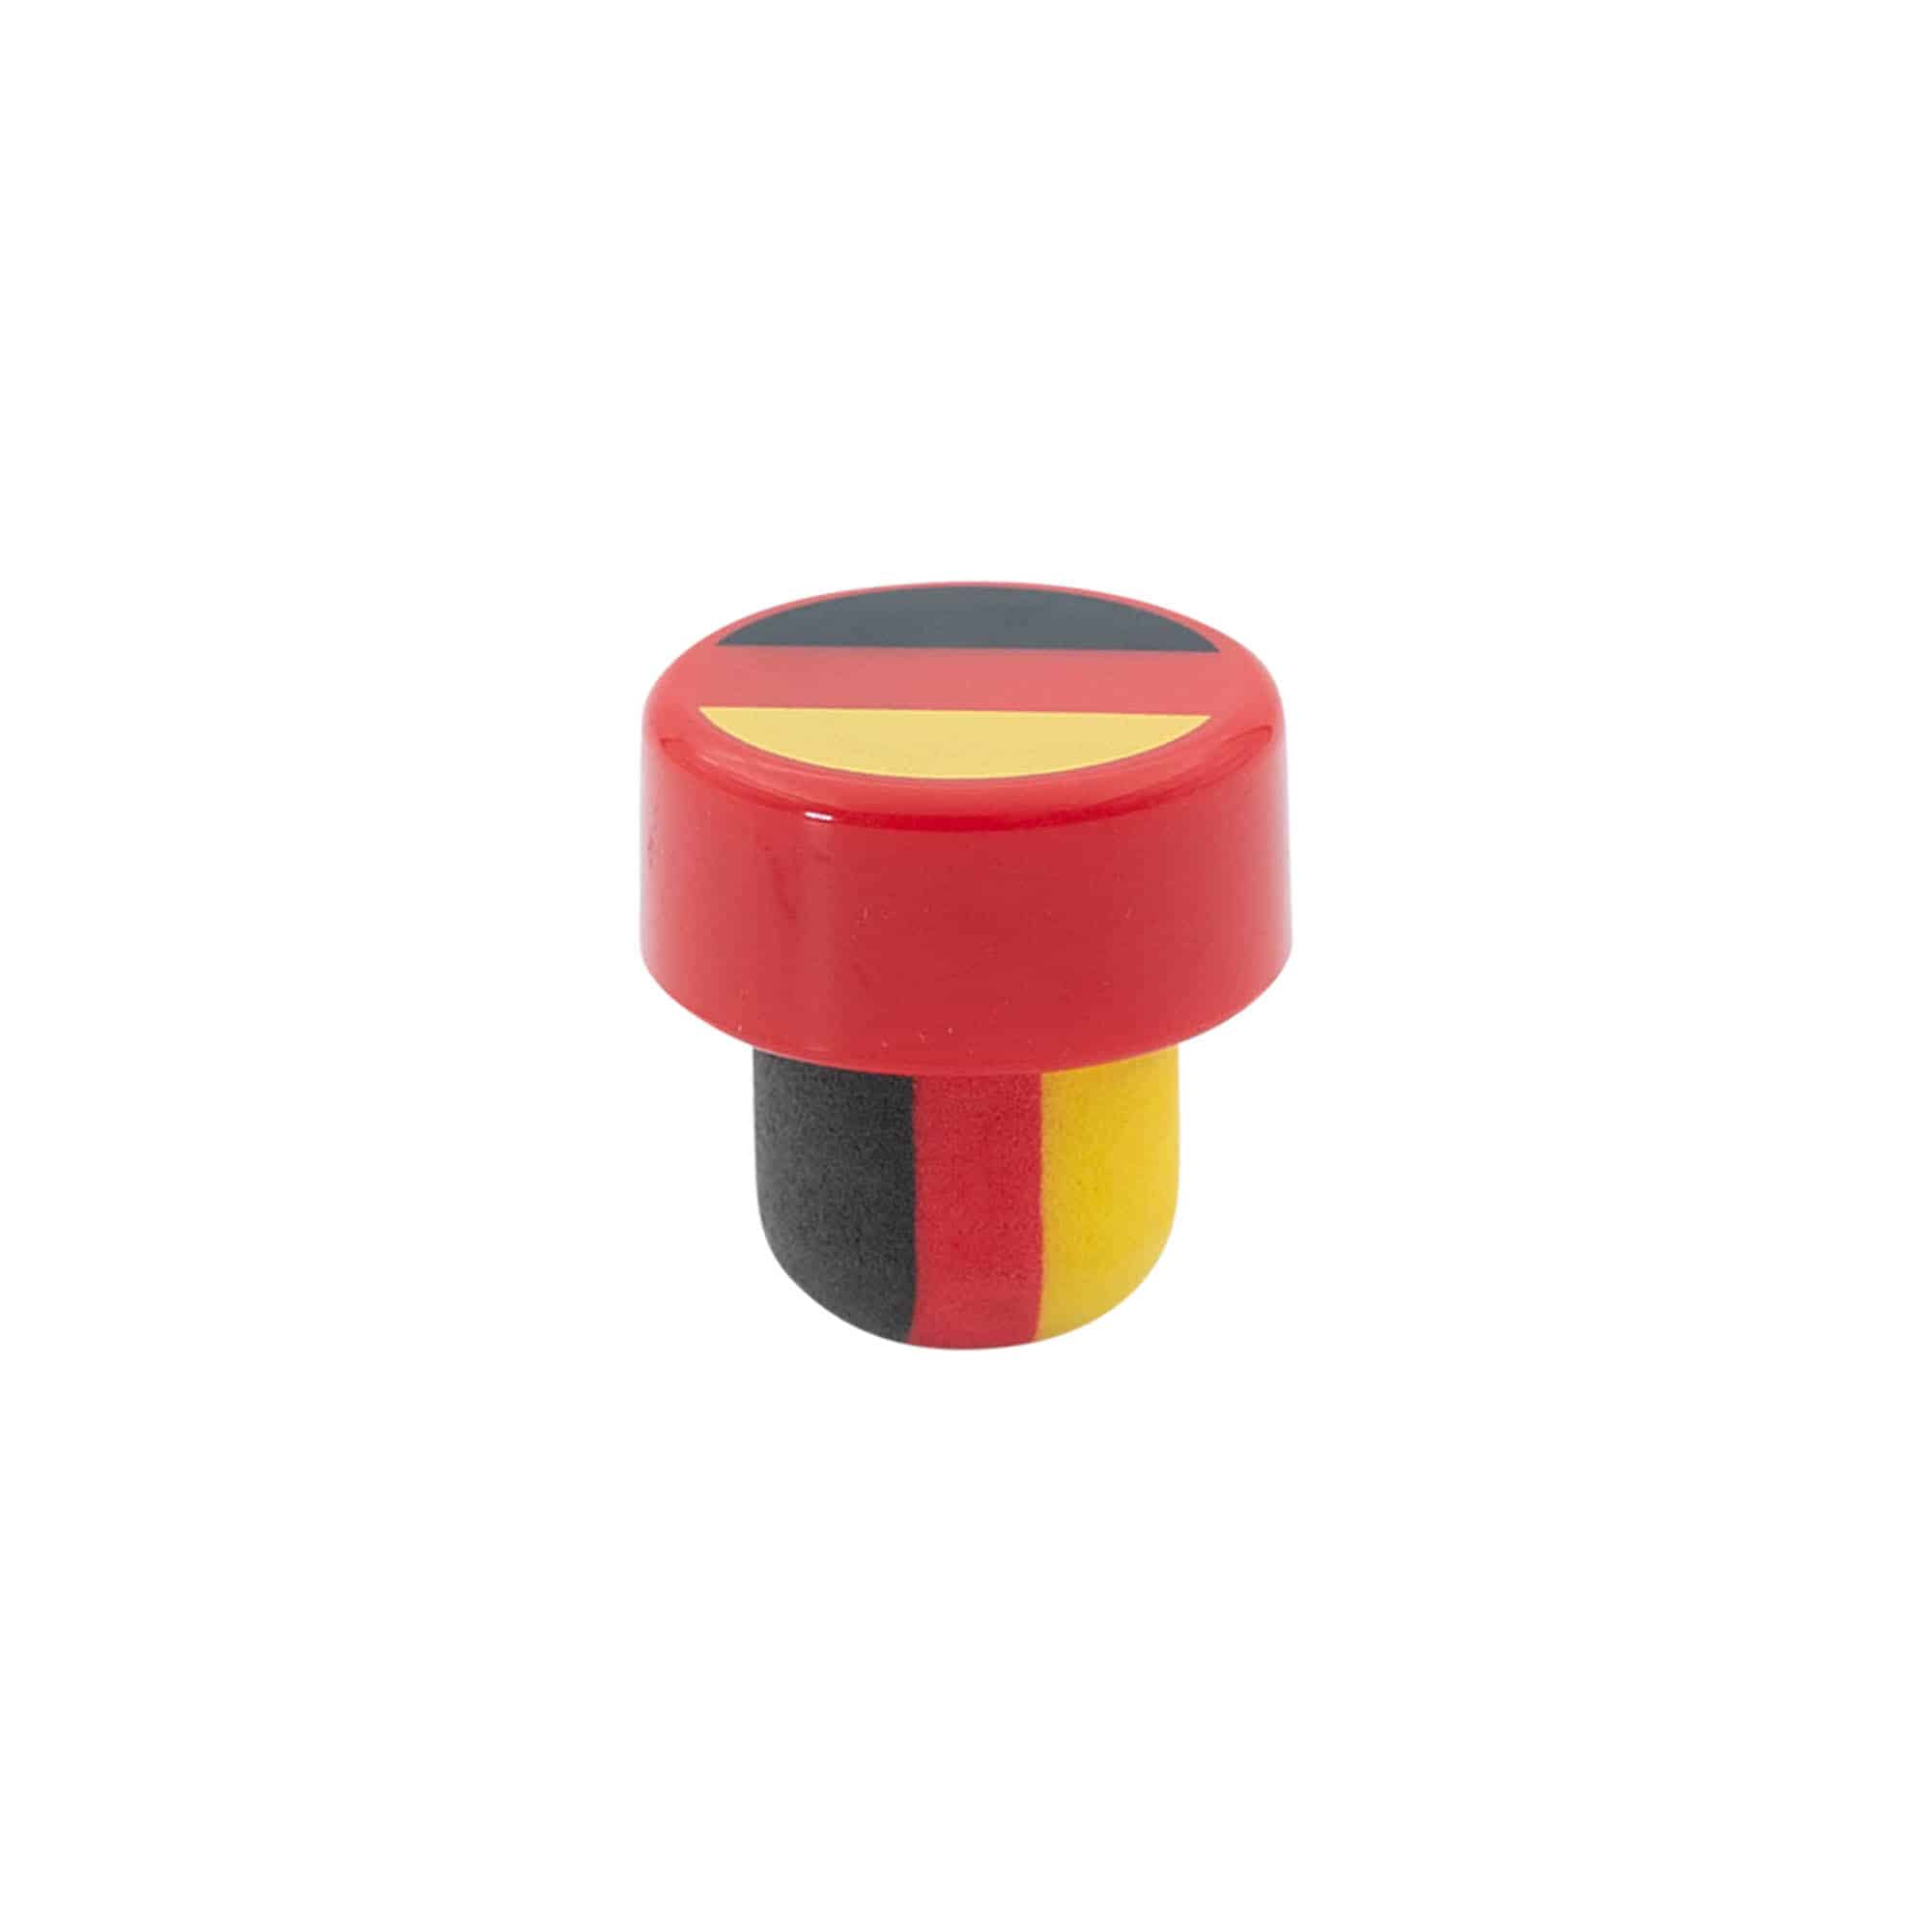 19 mm mushroom cork 'Germany', plastic, multicolour, for opening: cork